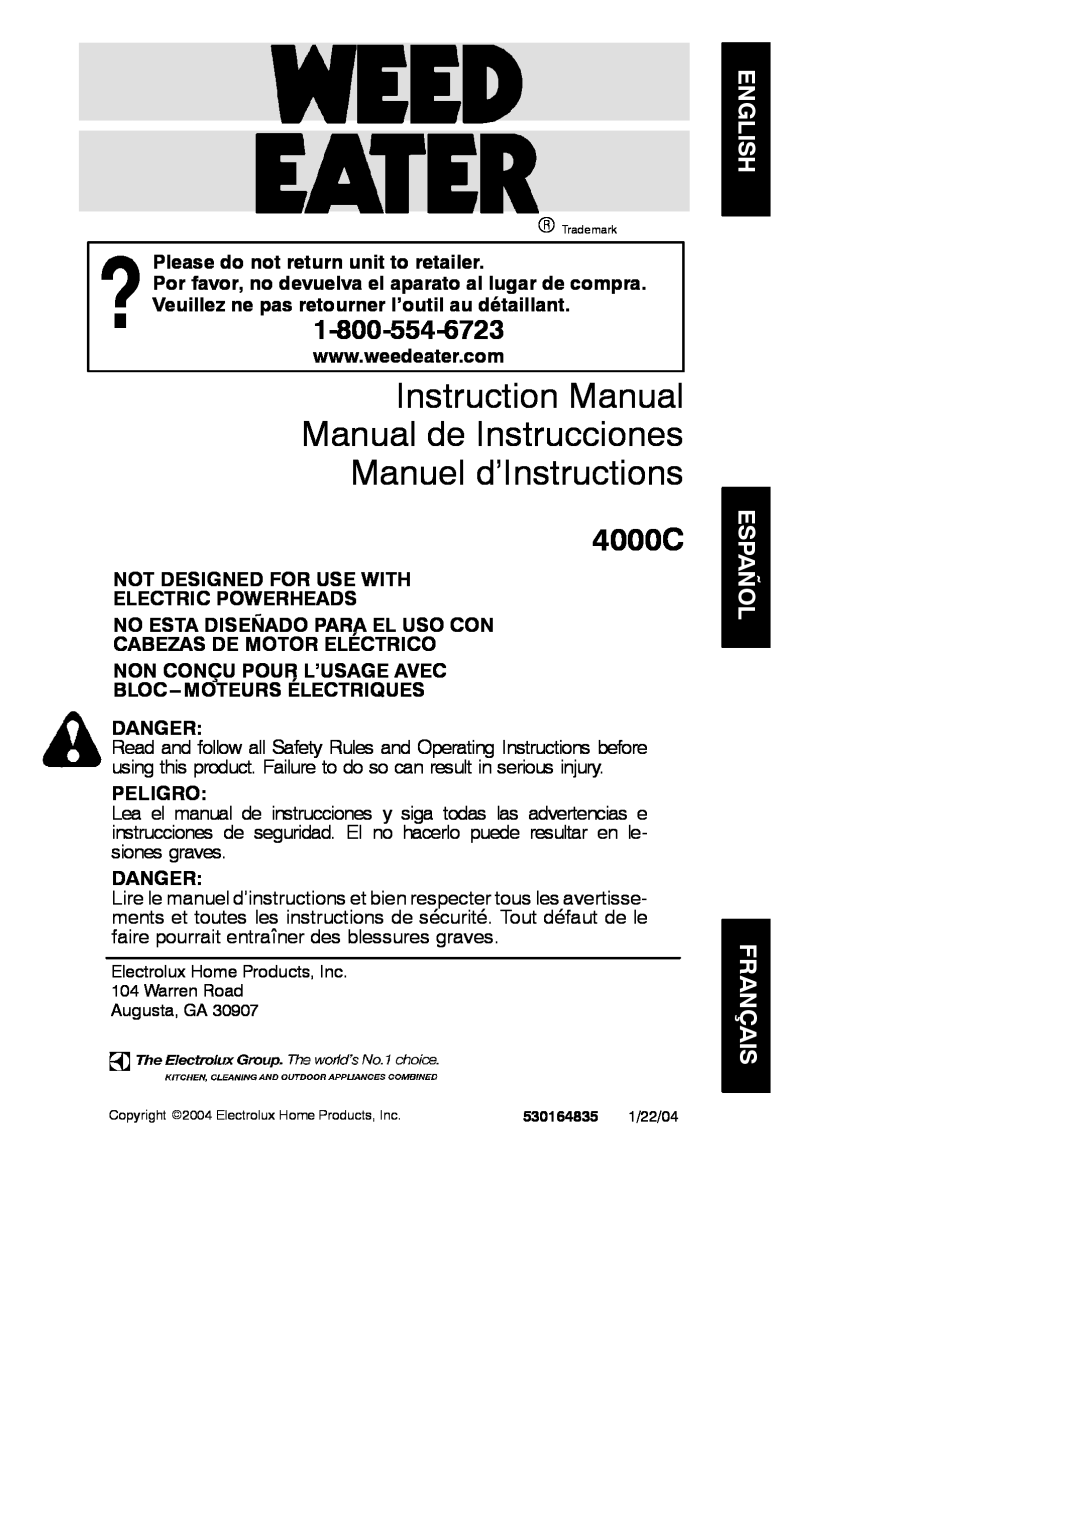 Weed Eater 530164835 instruction manual Please do not return unit to retailer, Danger, Peligro, Manuel d’Instructions 